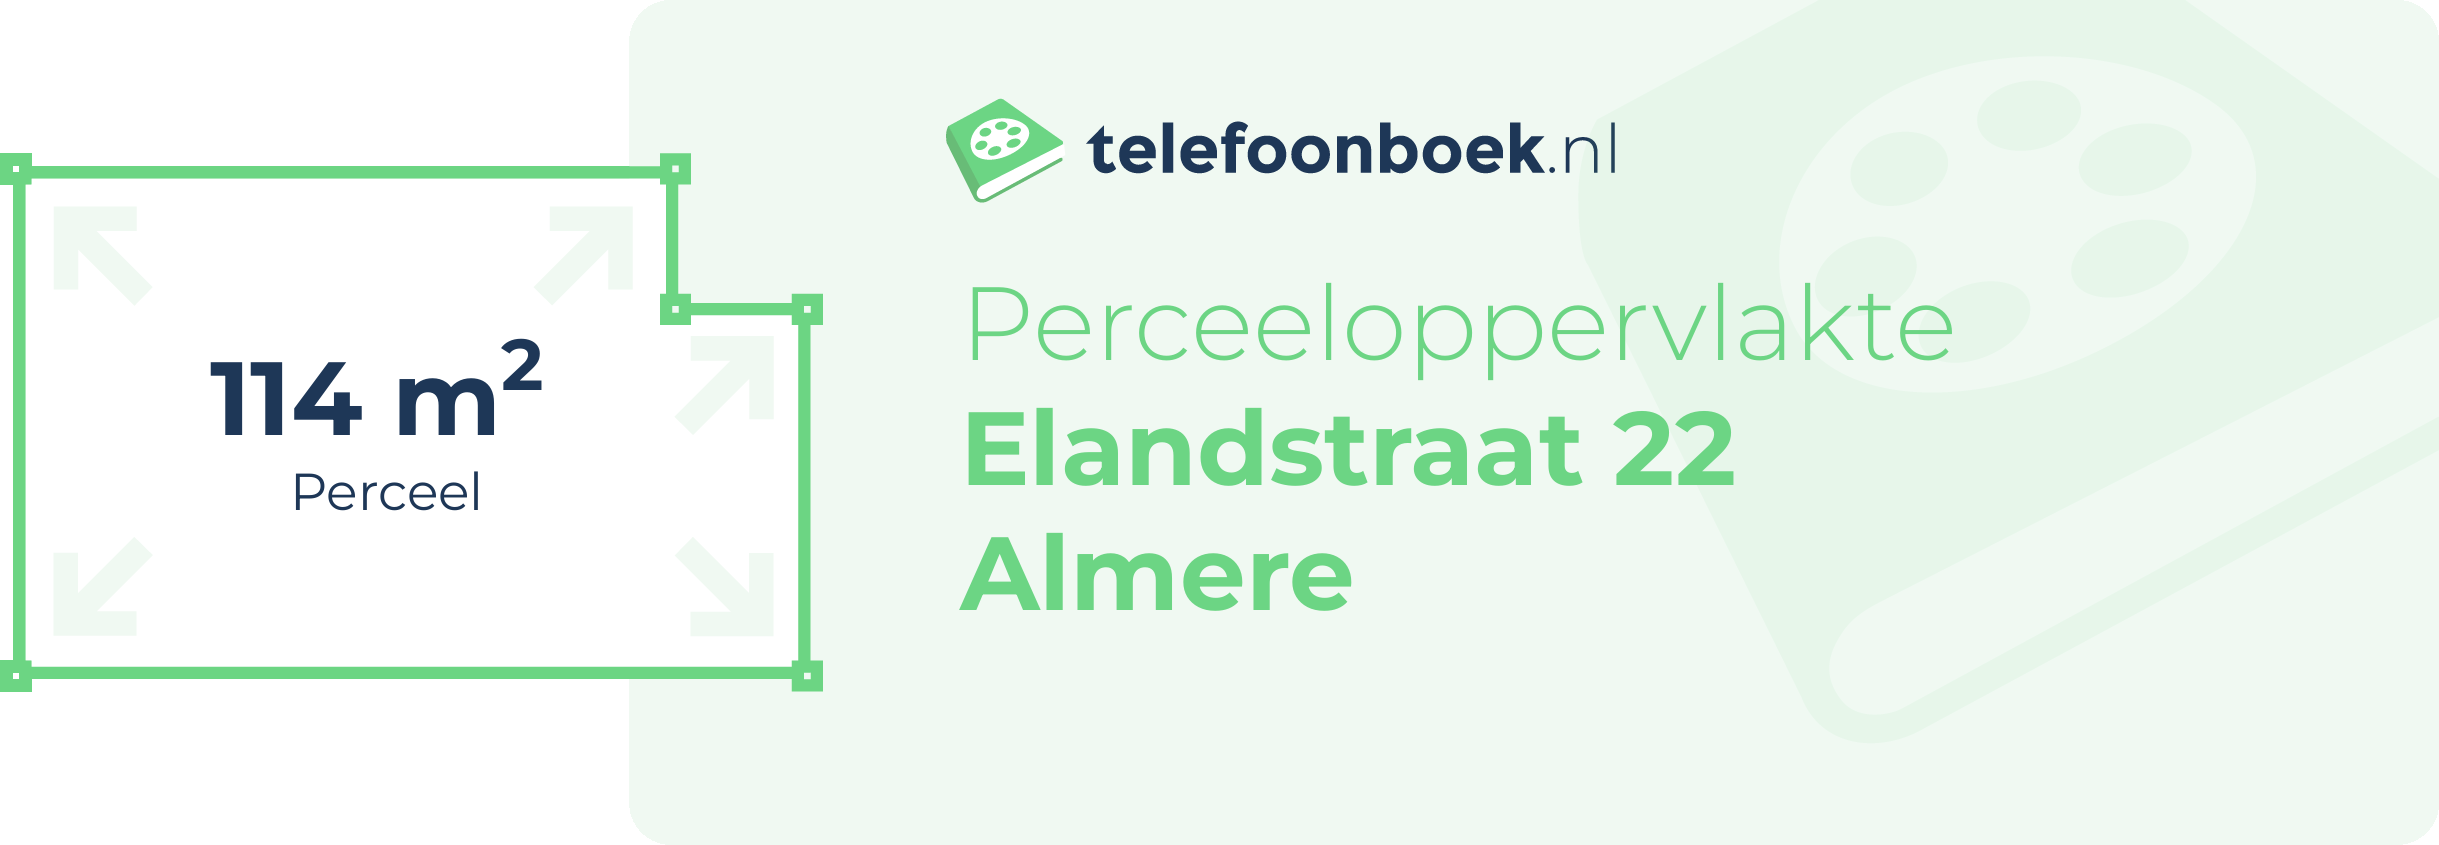 Perceeloppervlakte Elandstraat 22 Almere